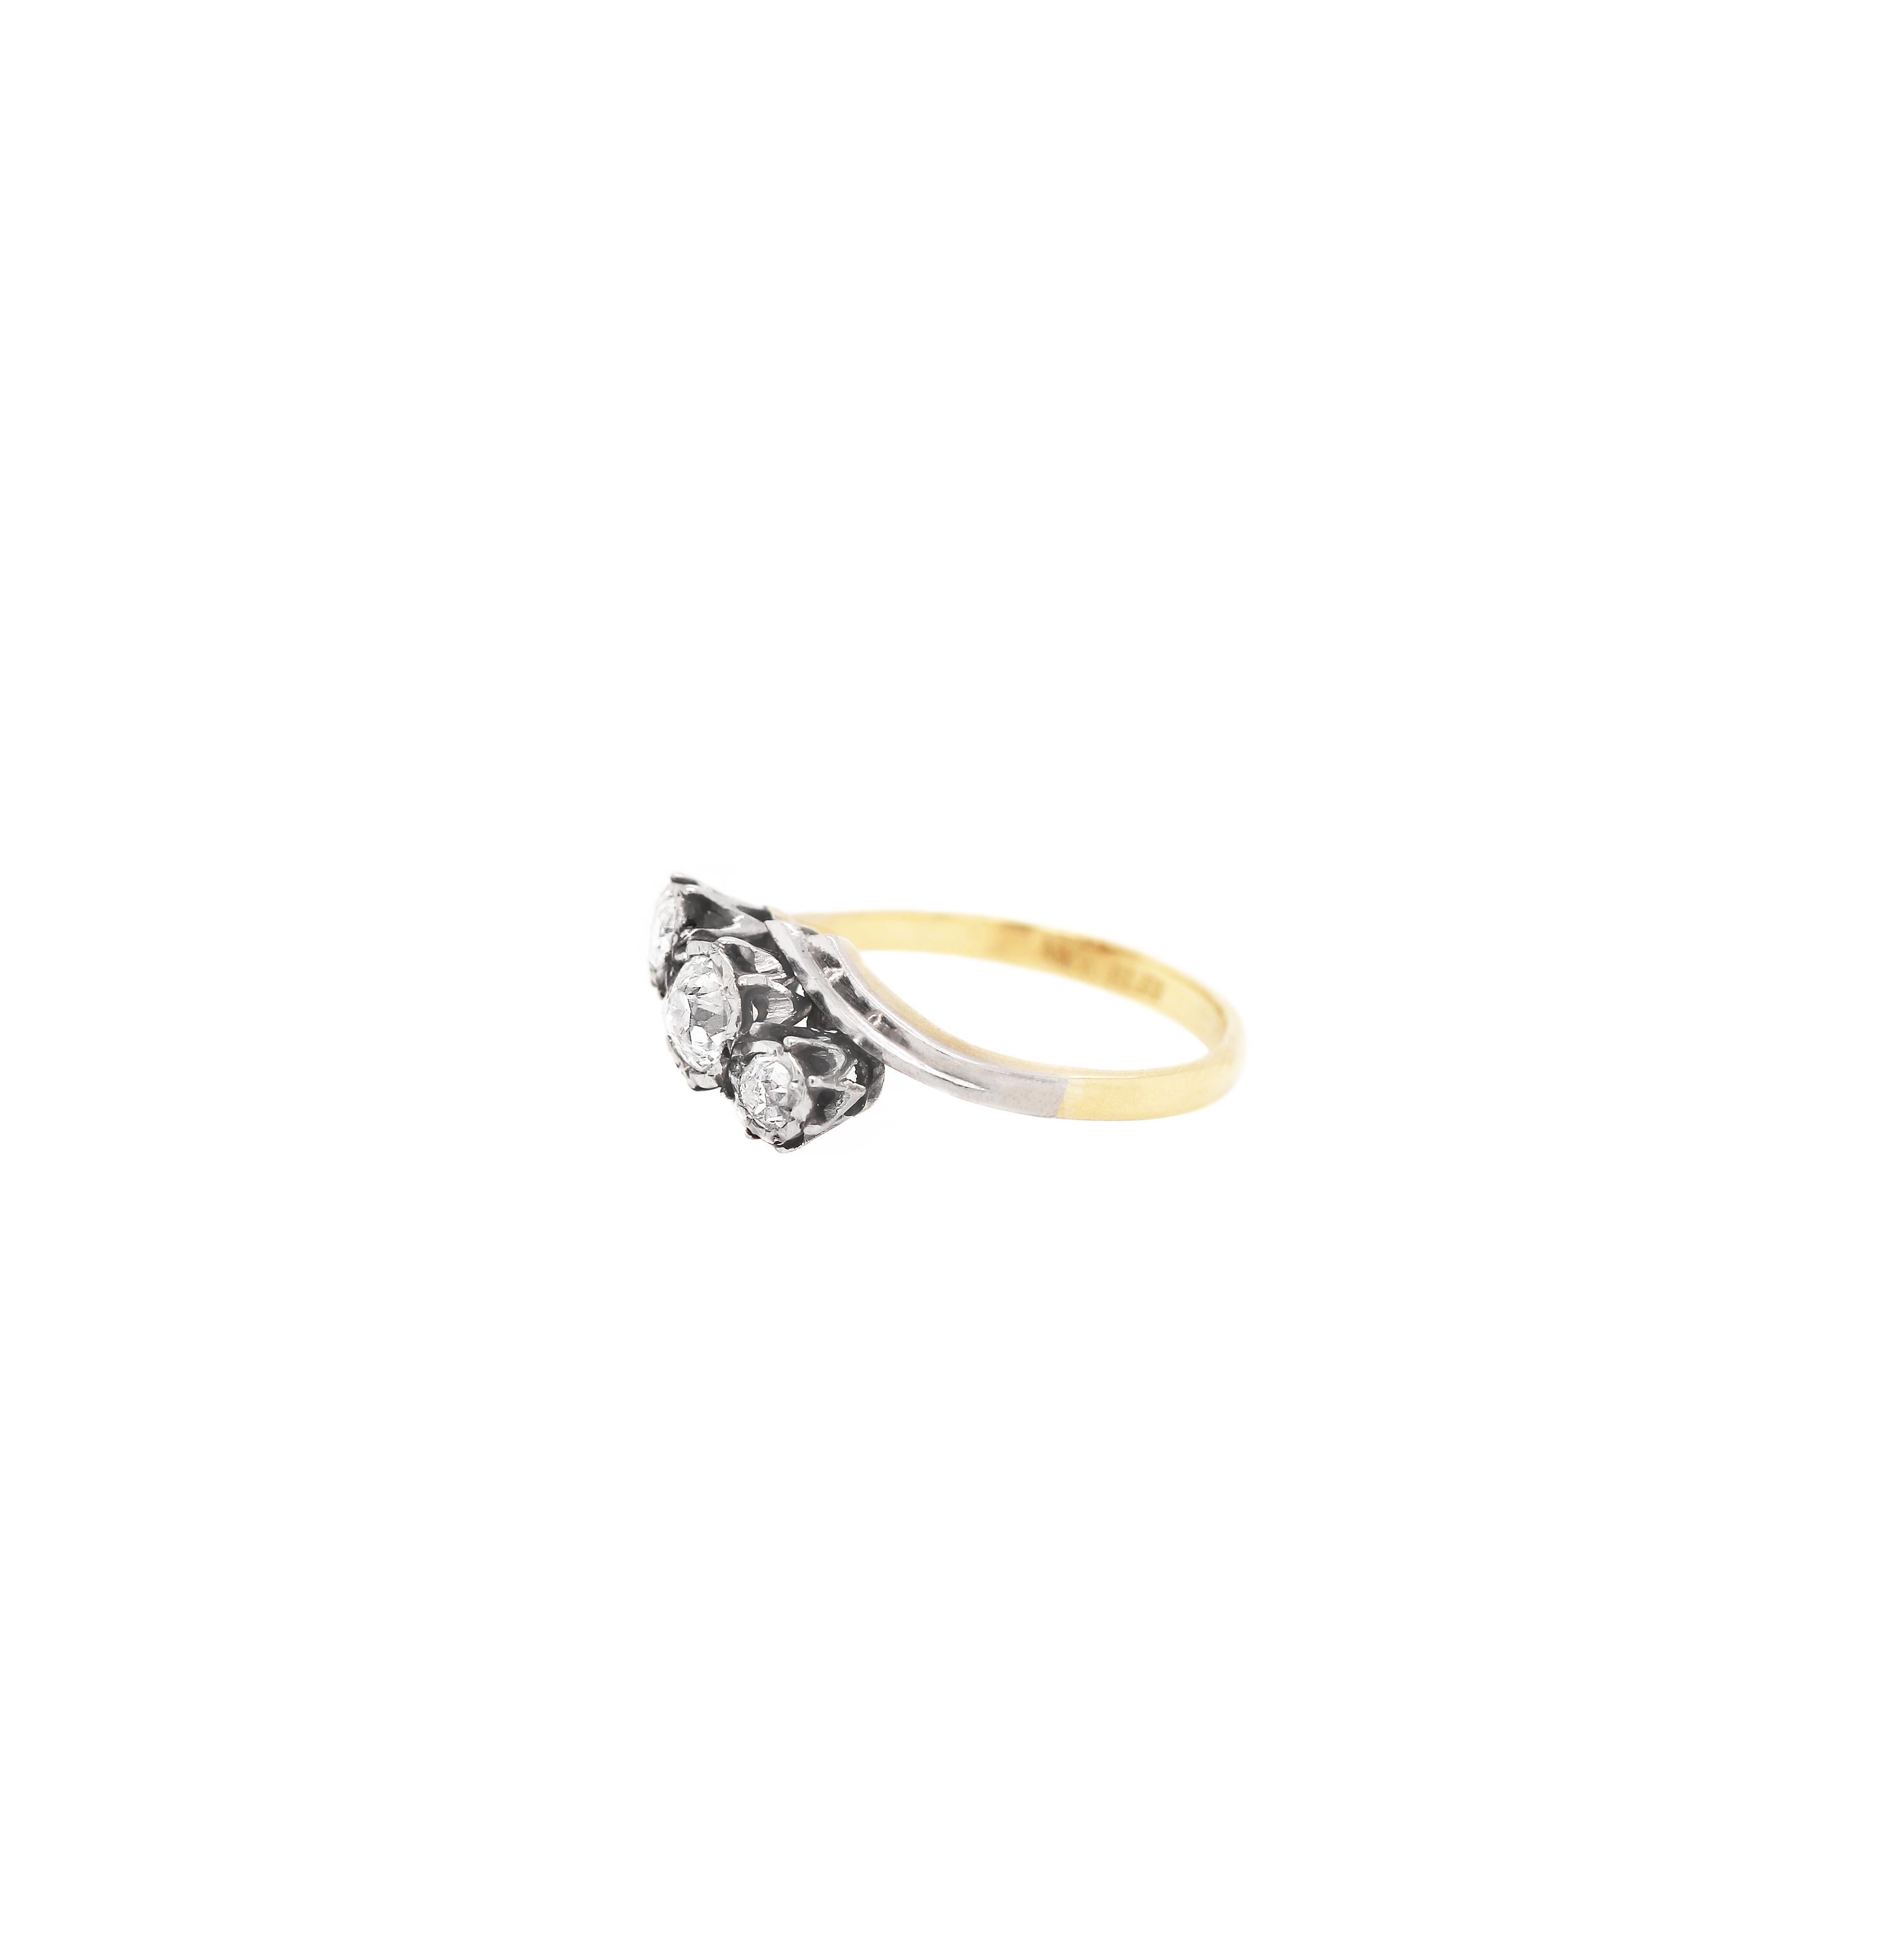 1920s 3 stone diamond ring